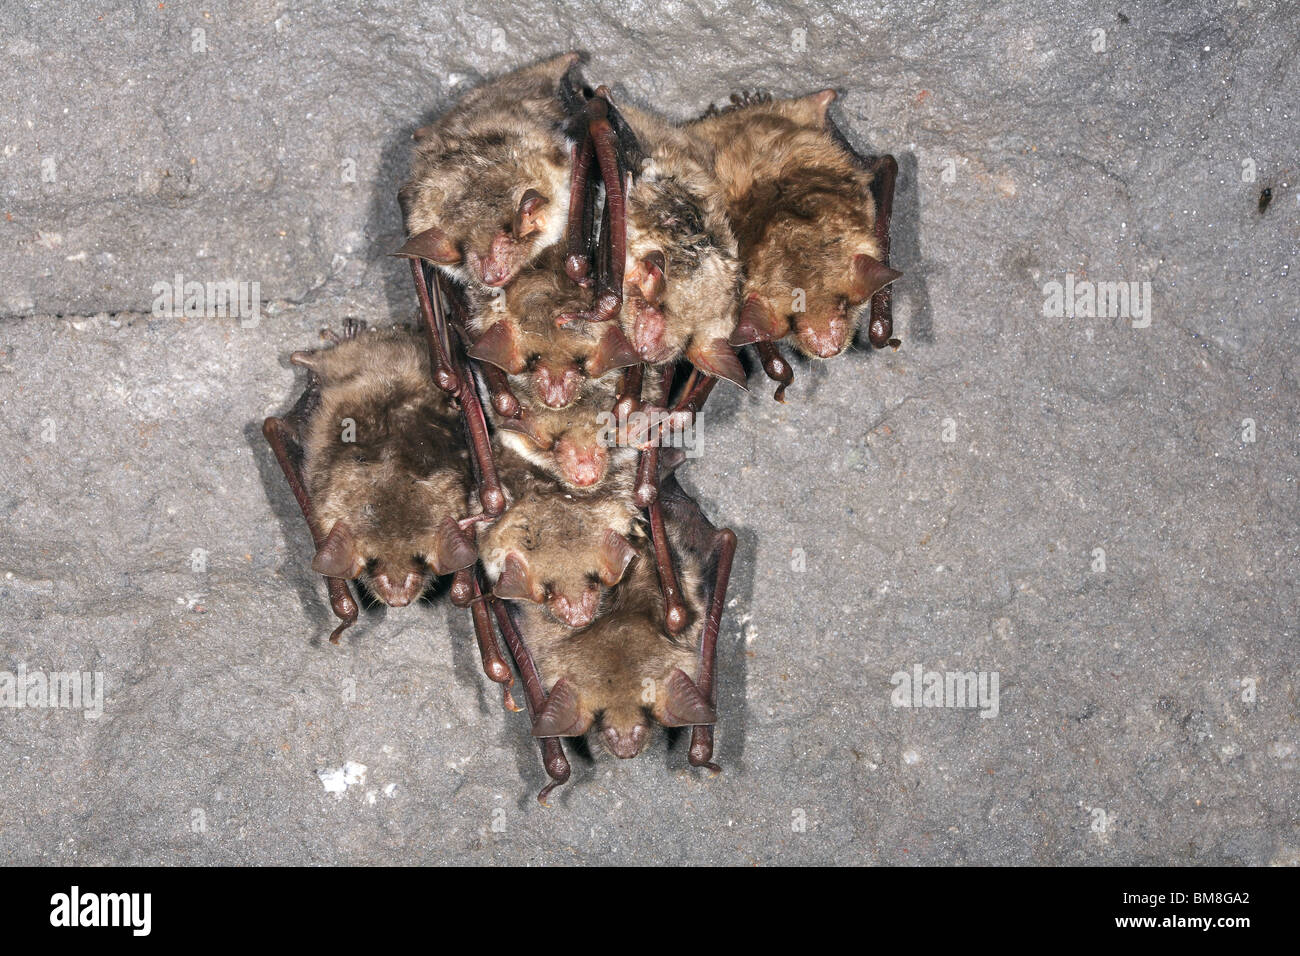 Greater Mouse-eared Bat (Myotis myotis). Eight individuals hibernating in winter shelter. Stock Photo